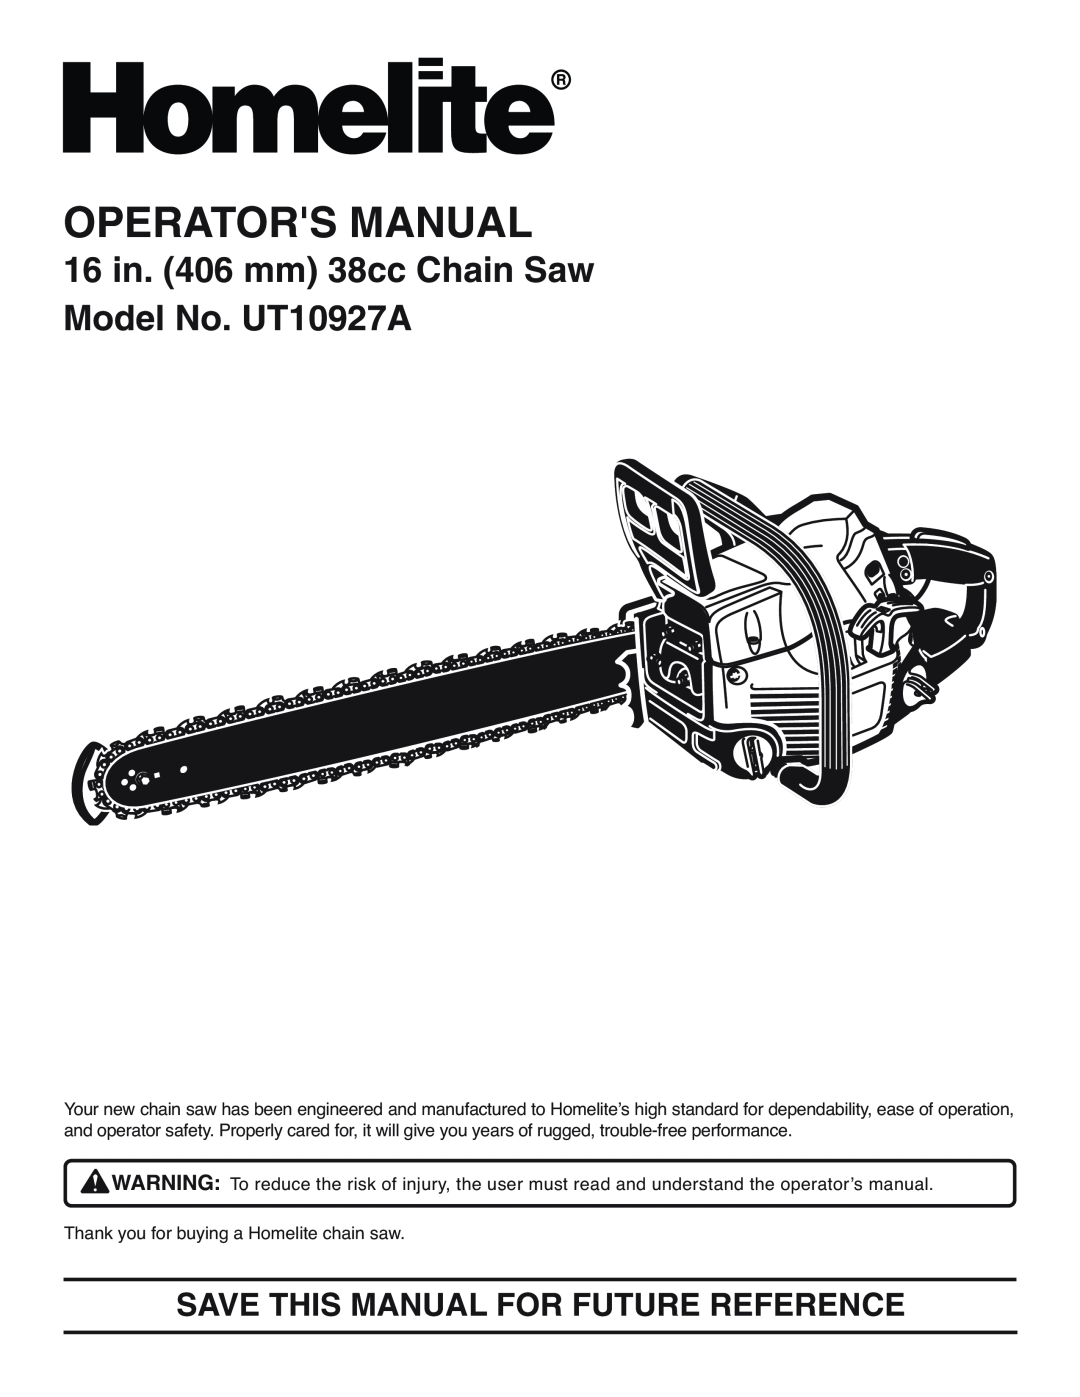 Homelite manual Operators Manual, 16 in. 406 mm 38cc Chain Saw Model No. UT10927A 